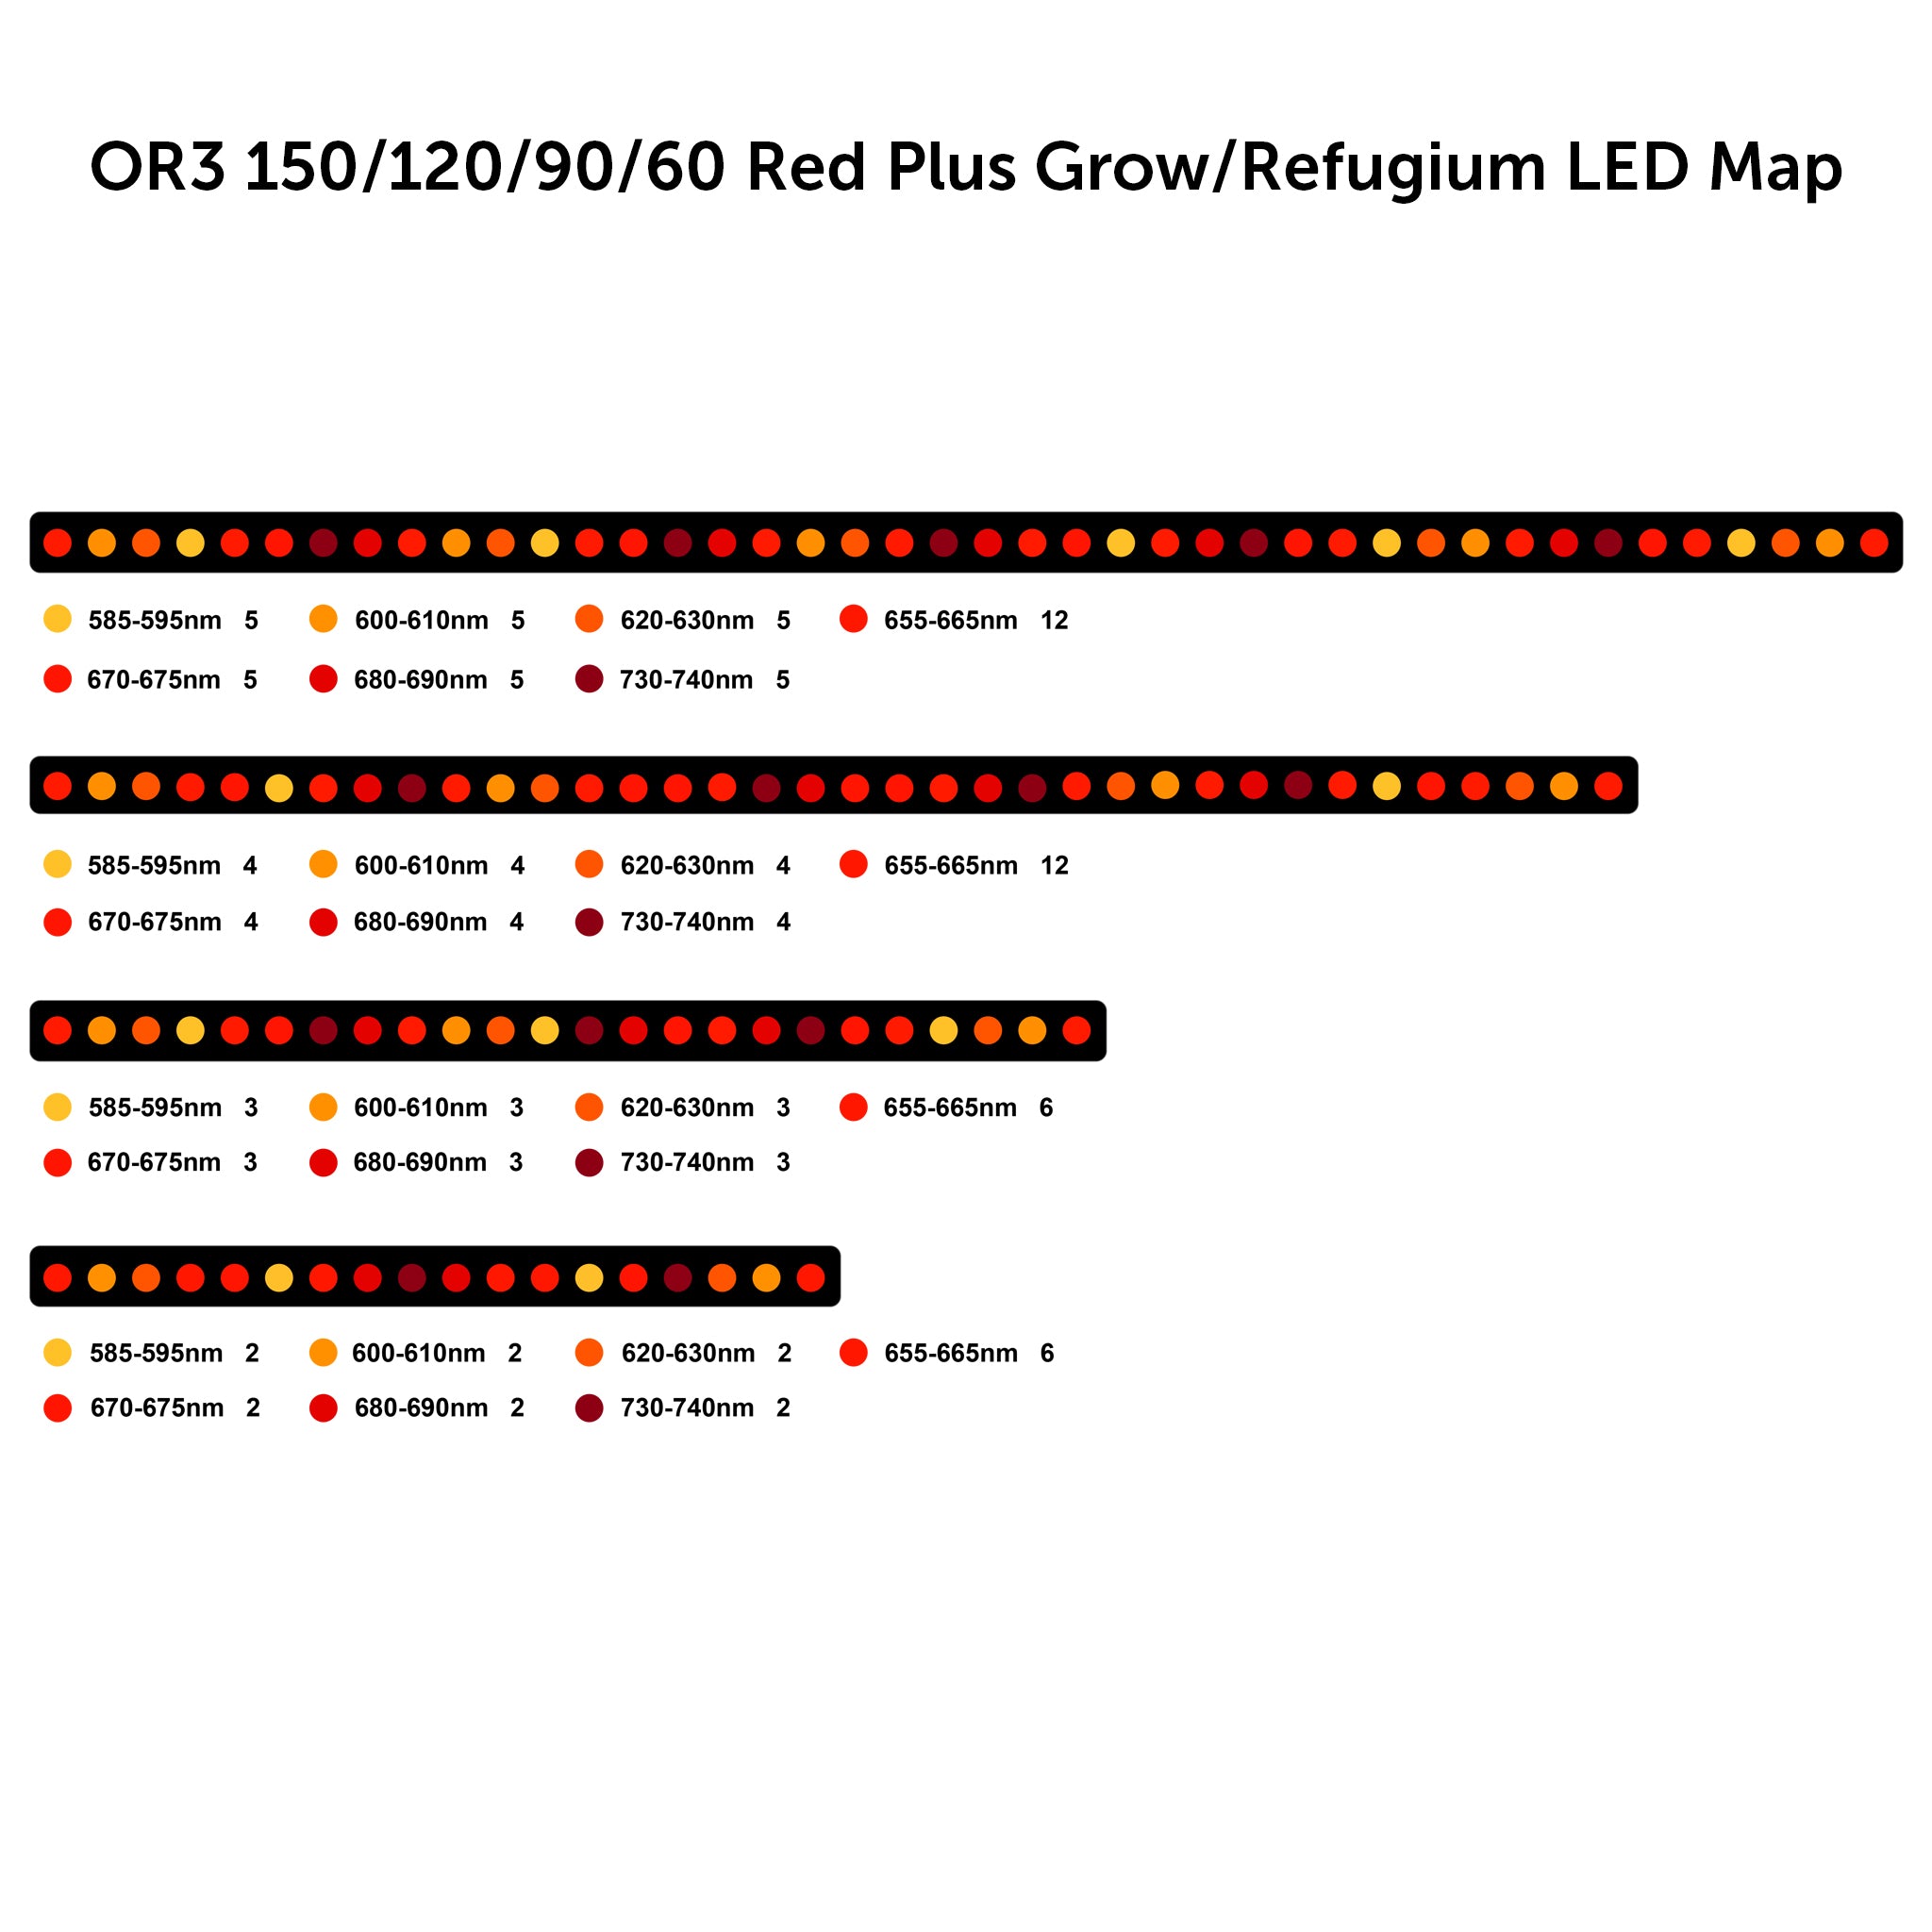 Barra LED OR3 Red Plus - Grow / Refugium